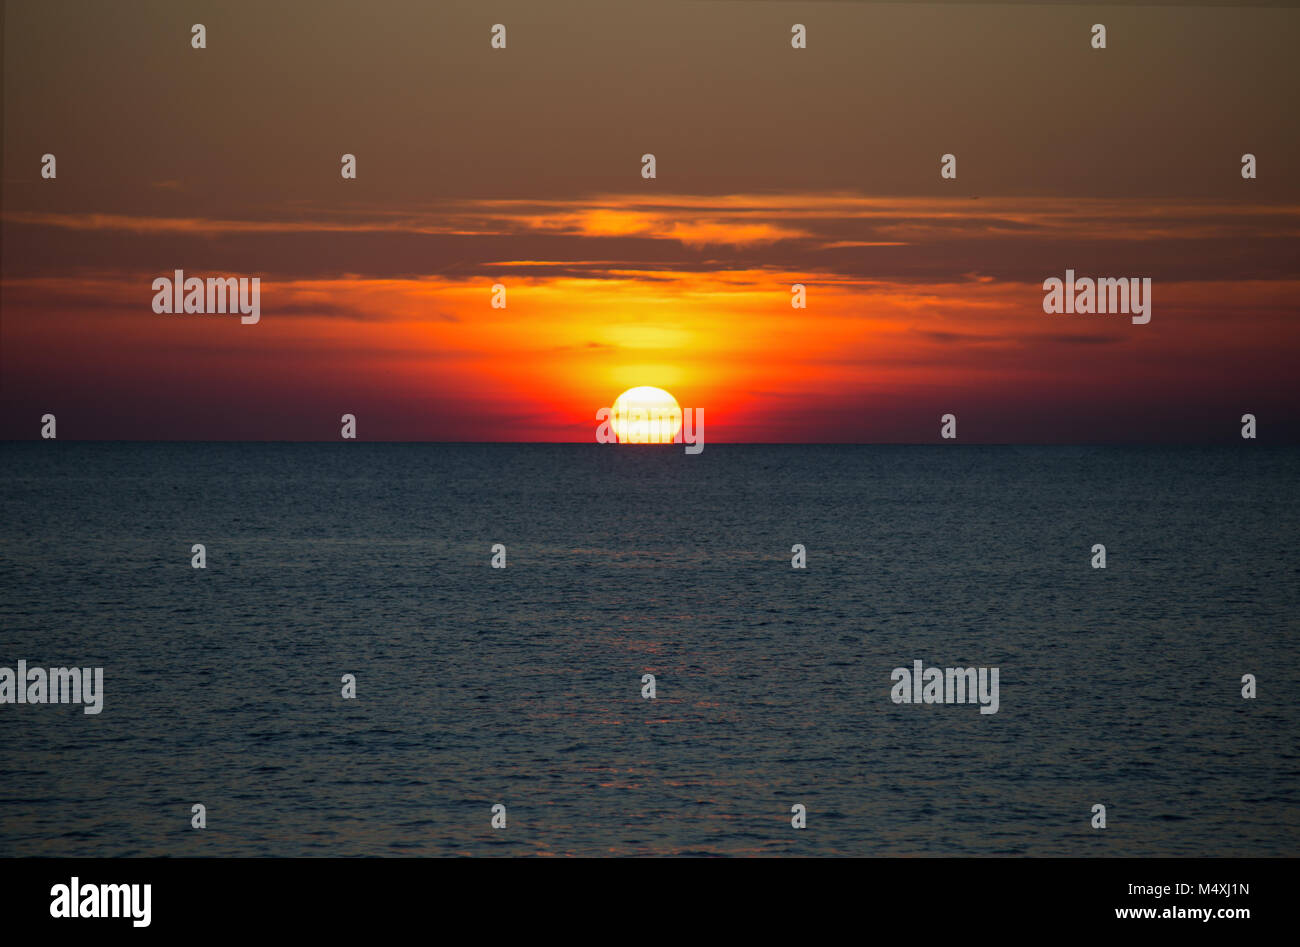 A beautiful sun setting on the horizon on the sea Stock Photo